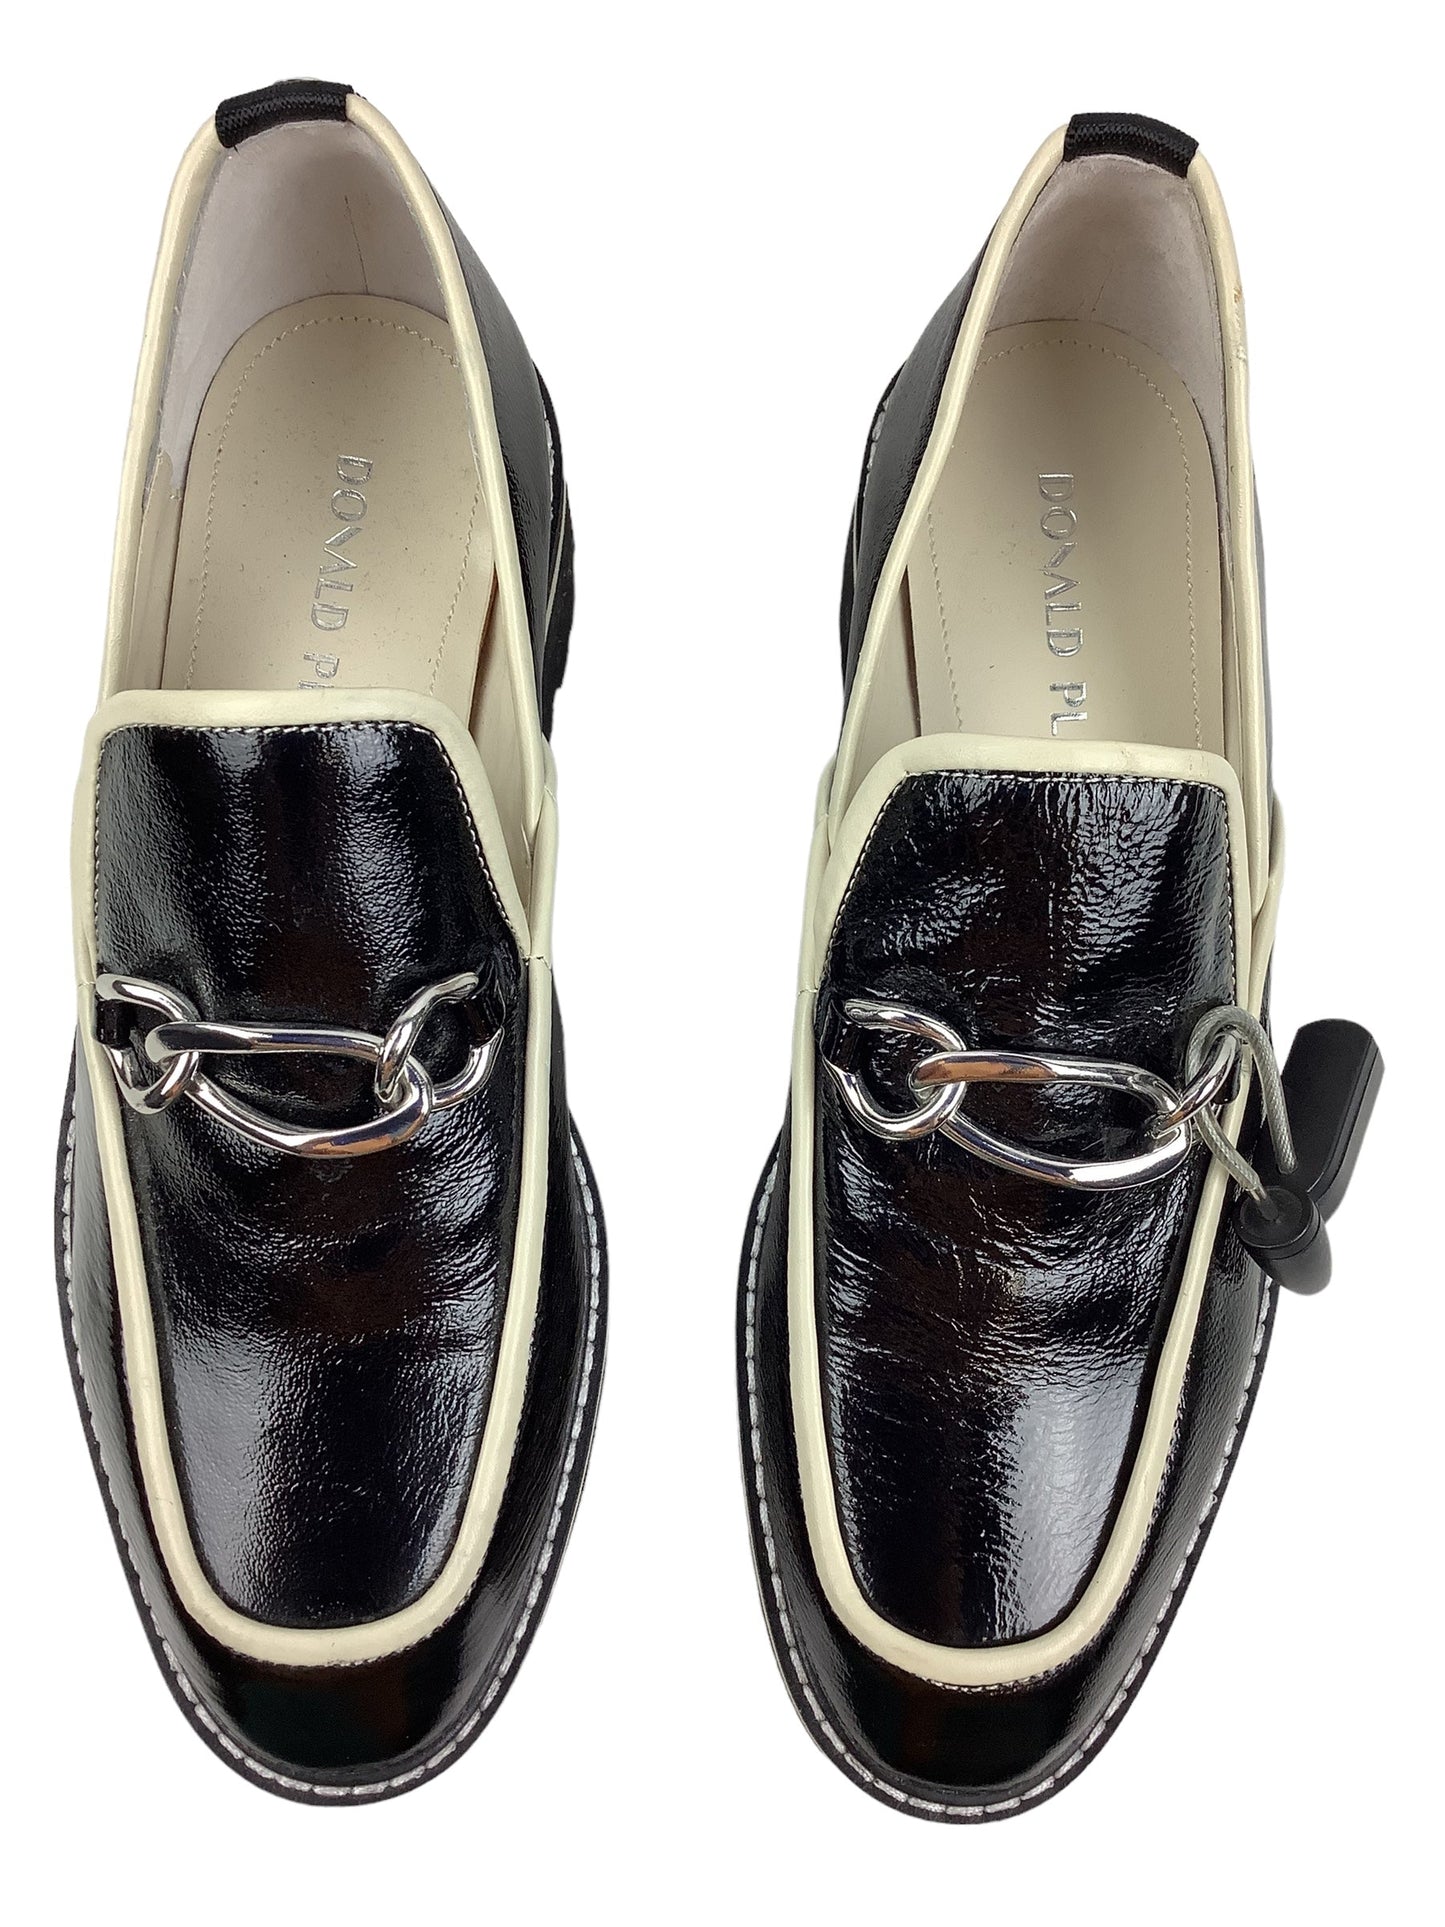 Shoes Flats By Donald Pliner  Size: 7